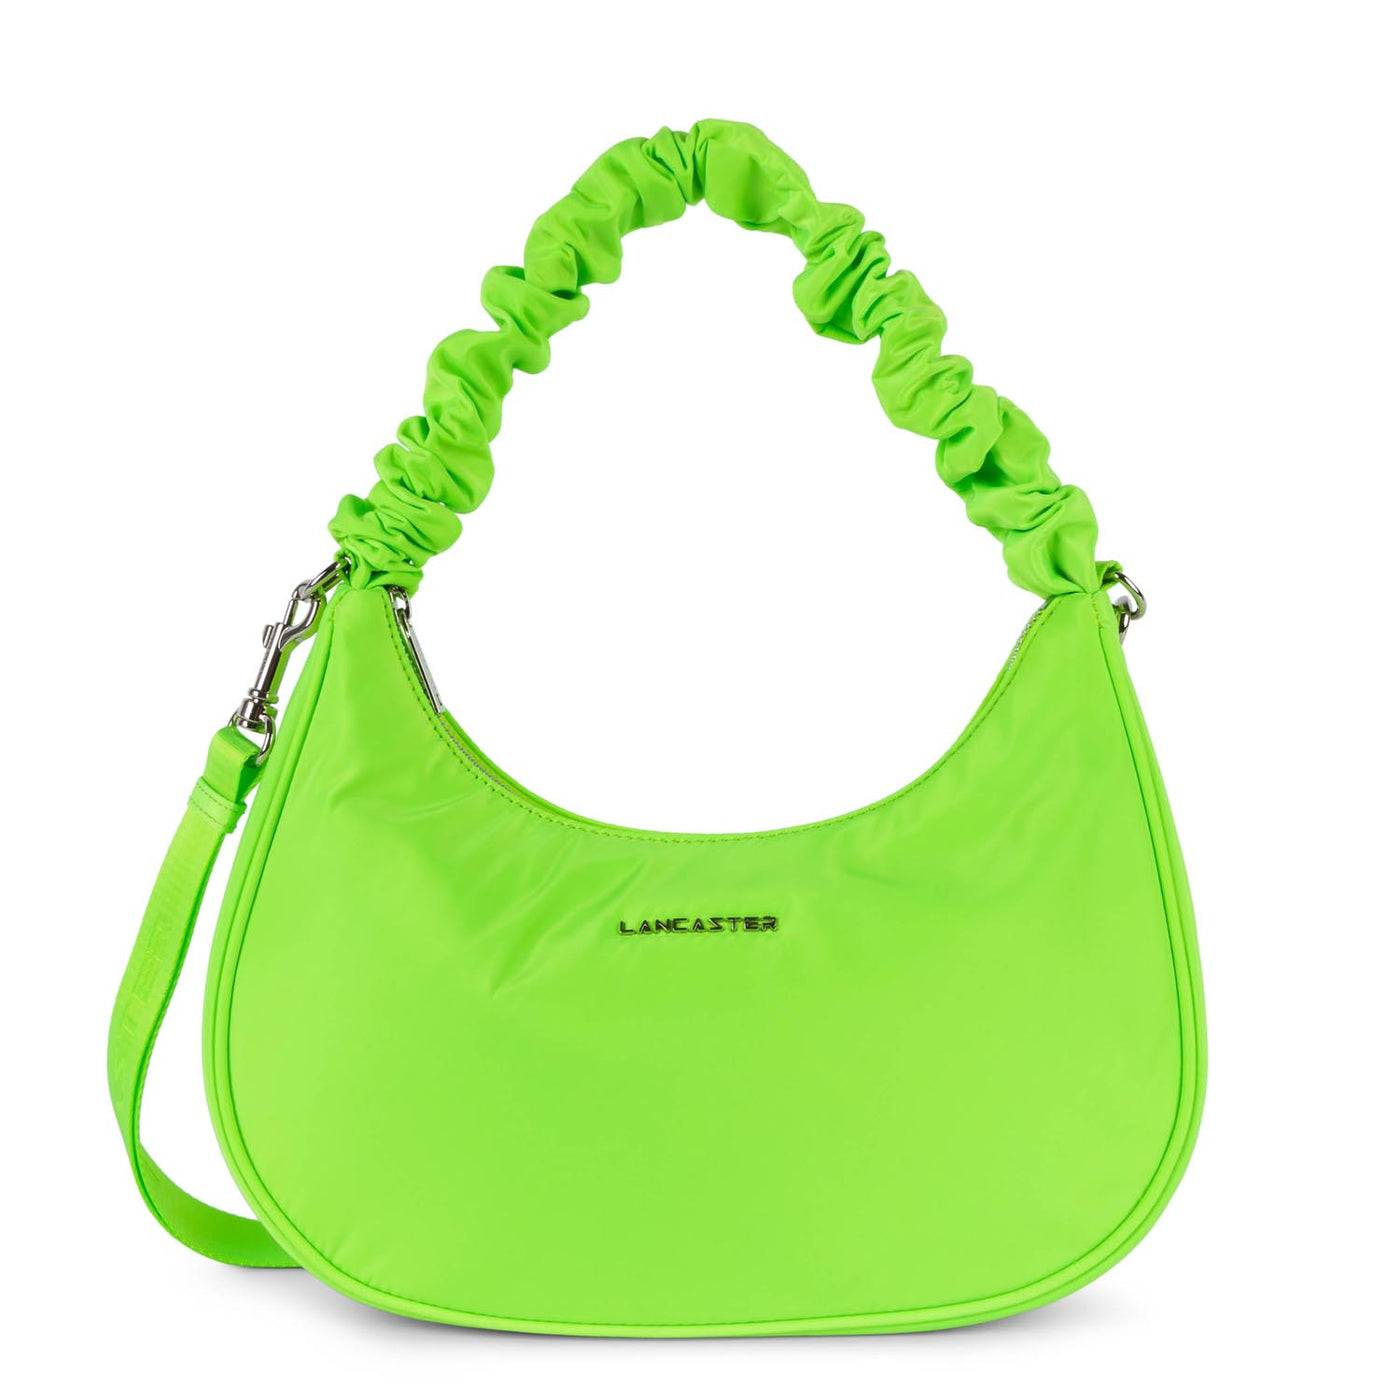 sac hobo - basic chouchou #couleur_vert-fluo